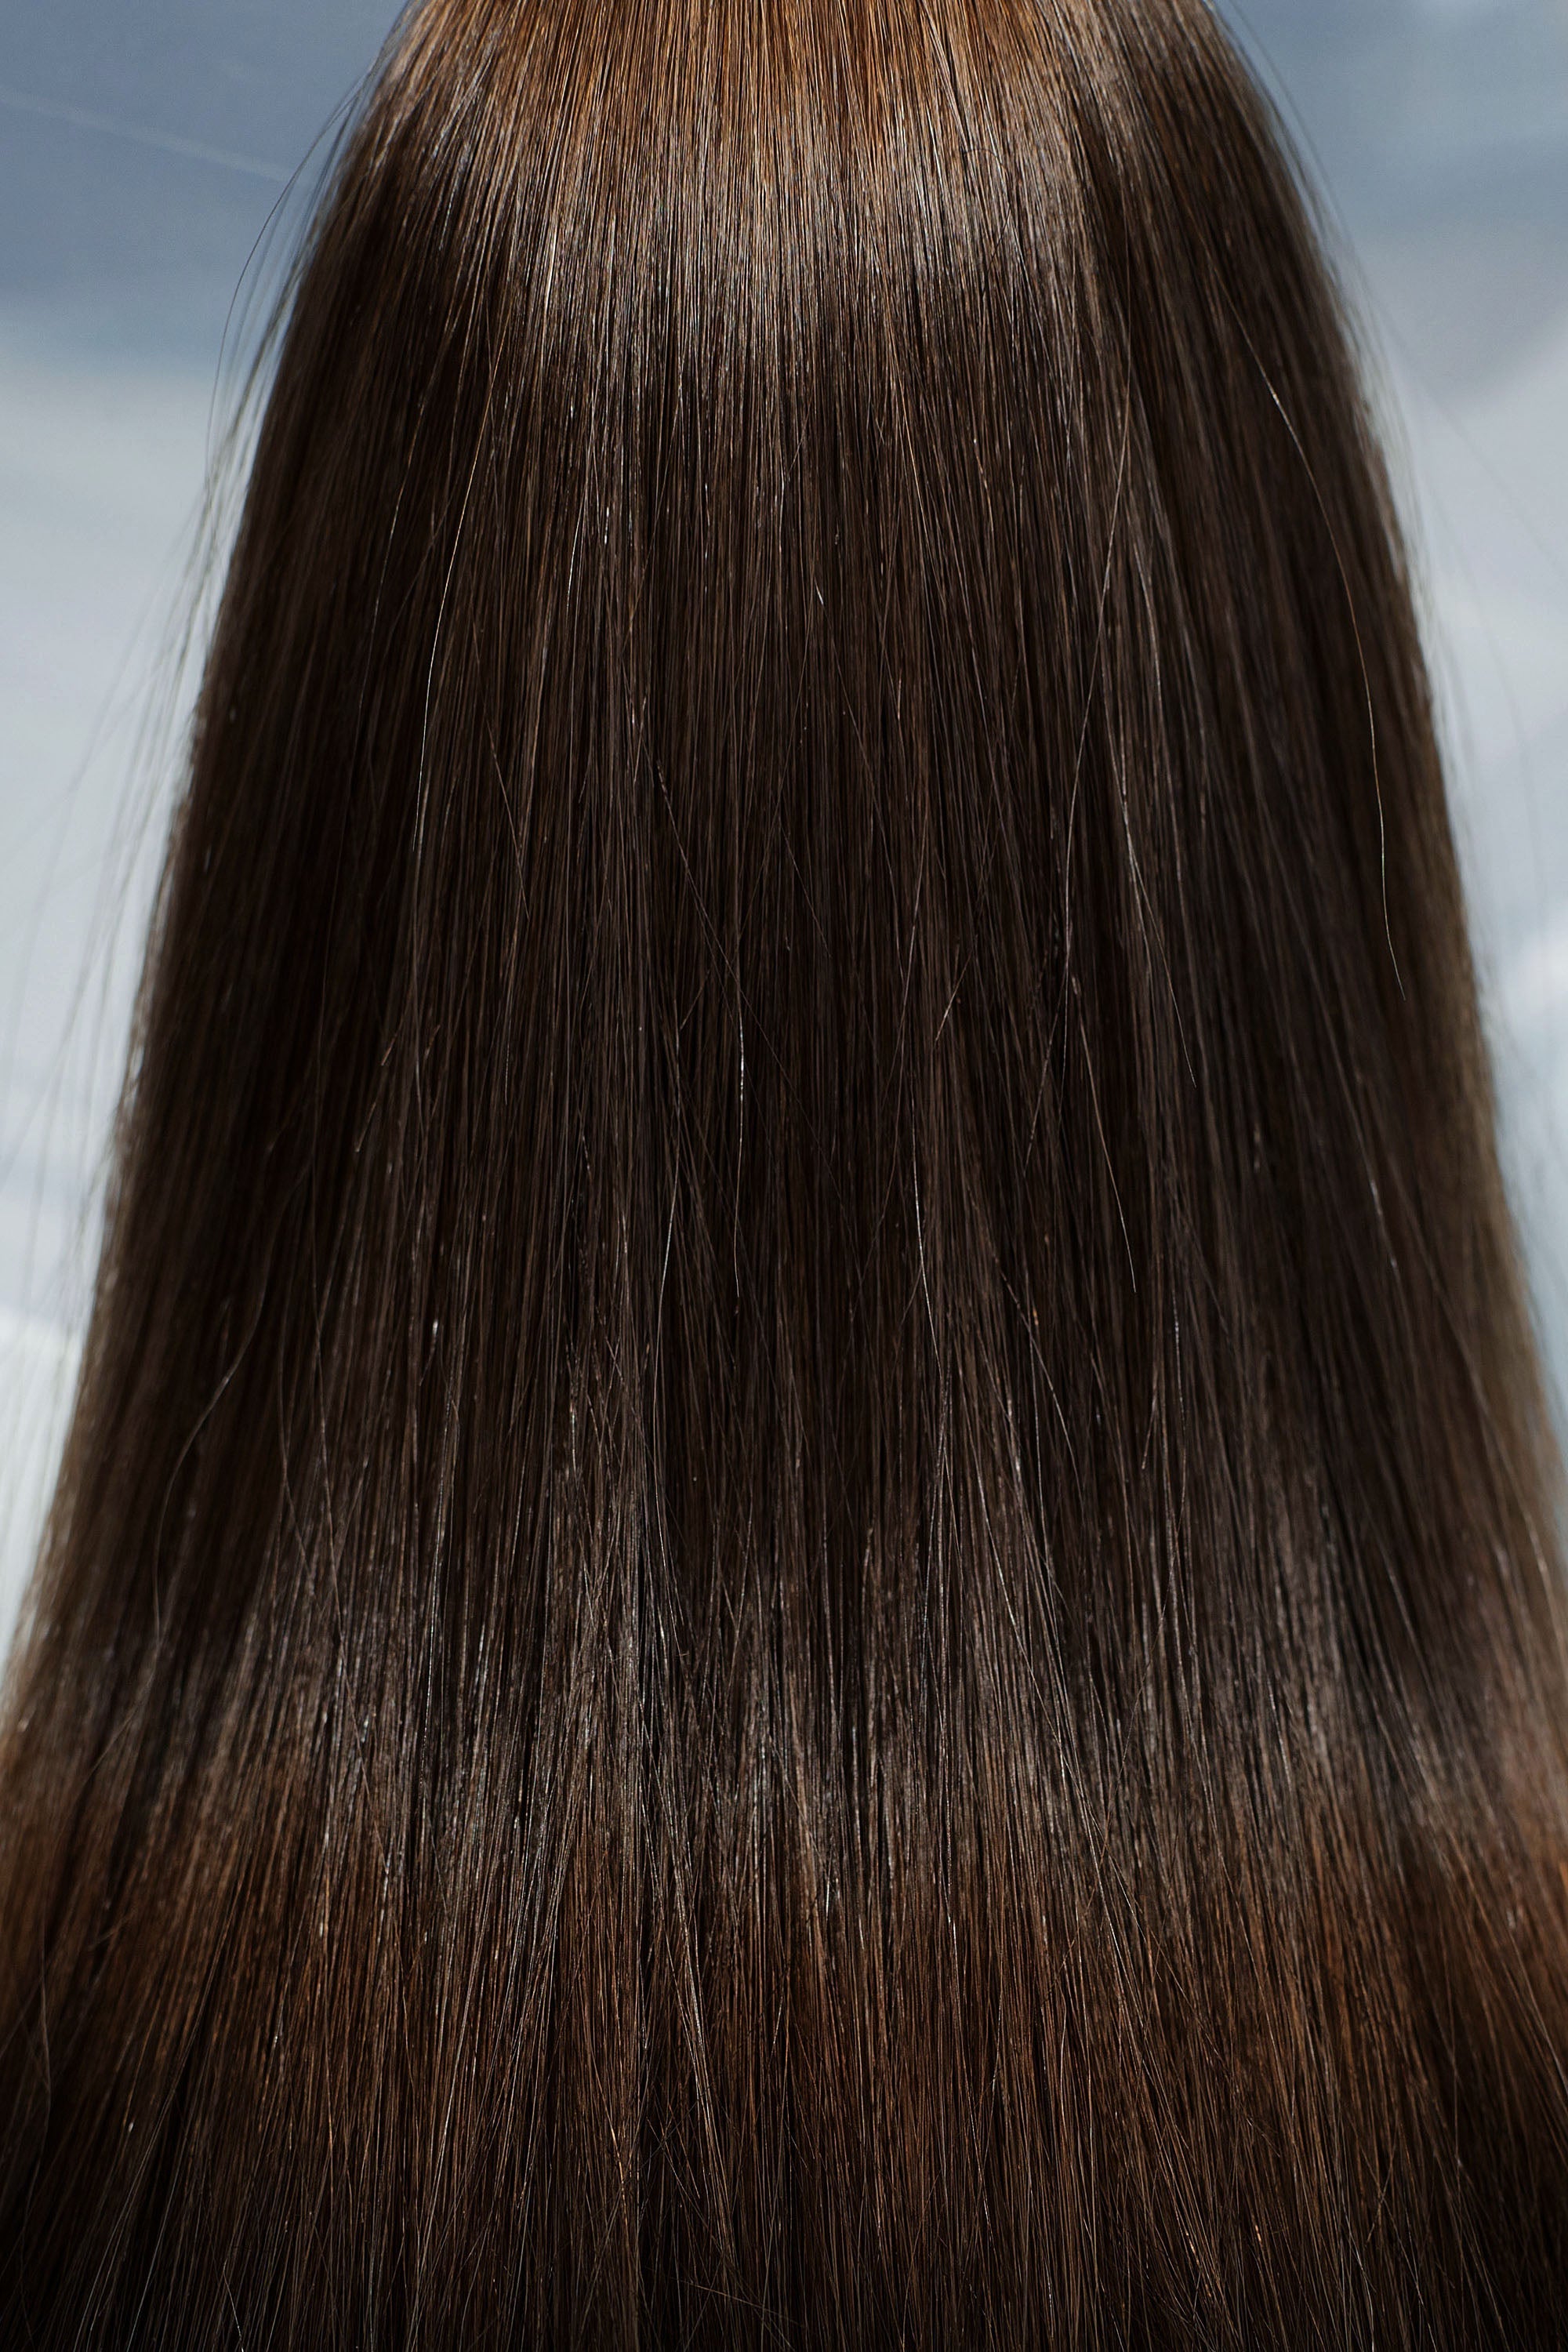 Behair professional Keratin Tip "Premium" 22" (55cm) Natural Straight Light Brown #4 - 25g (1g each pcs) hair extensions